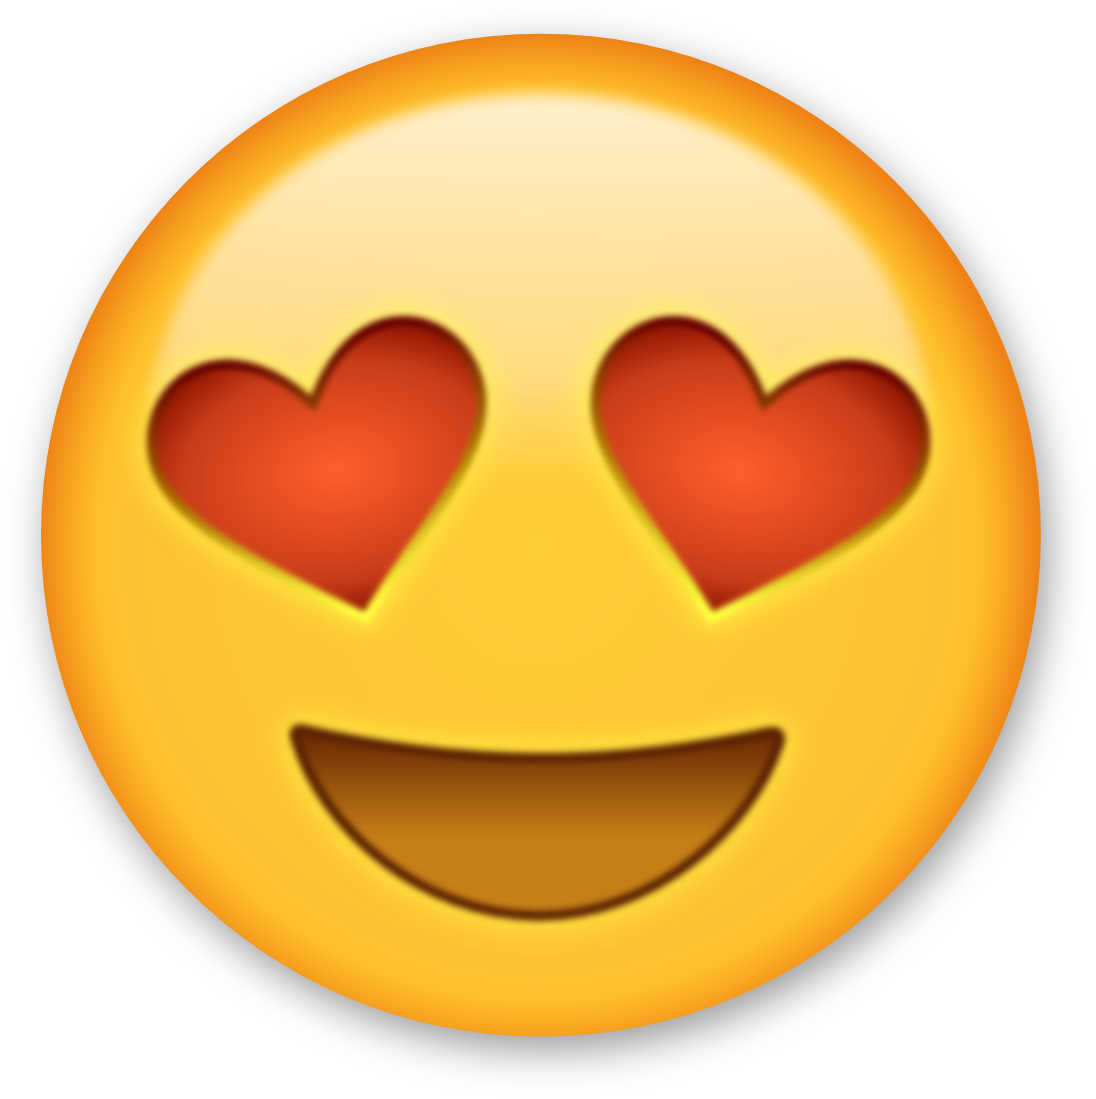 Love Emoji Image Photos Picture